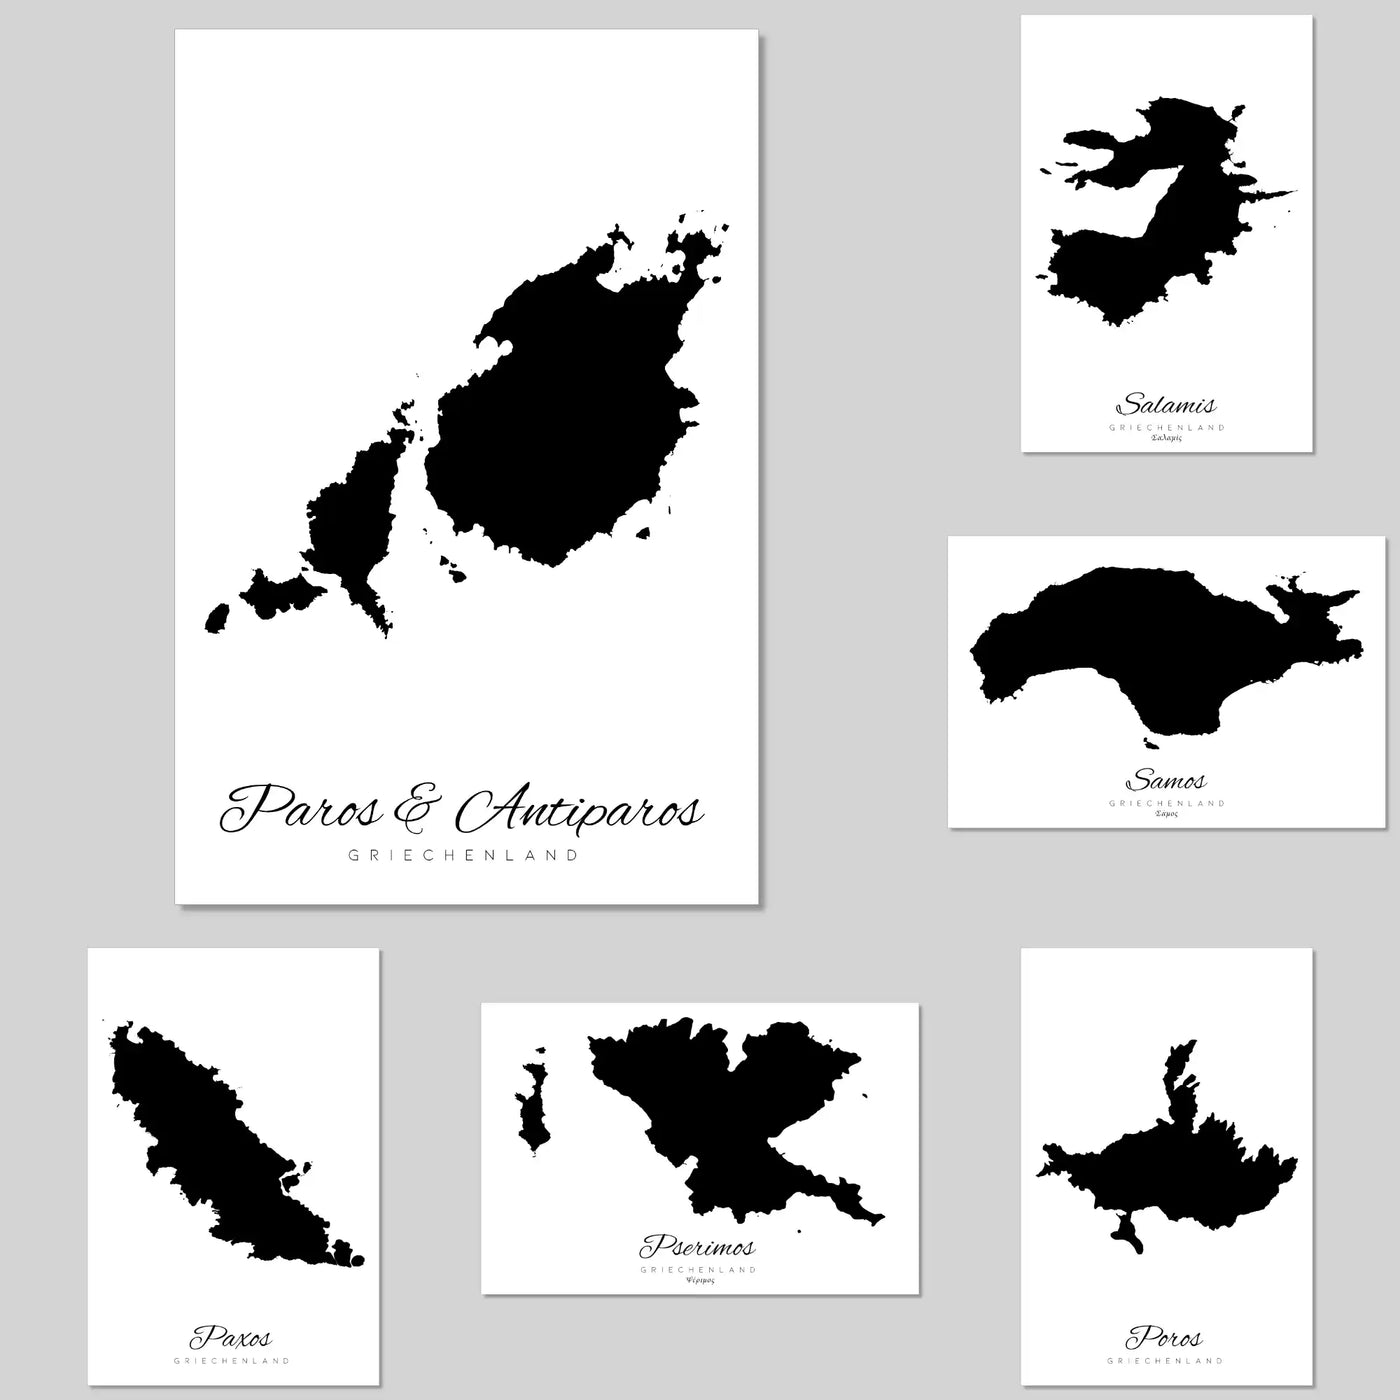 Island silhouettes Greece | 100x150 cm | 61 different Greek islands | Aluminium composite panel